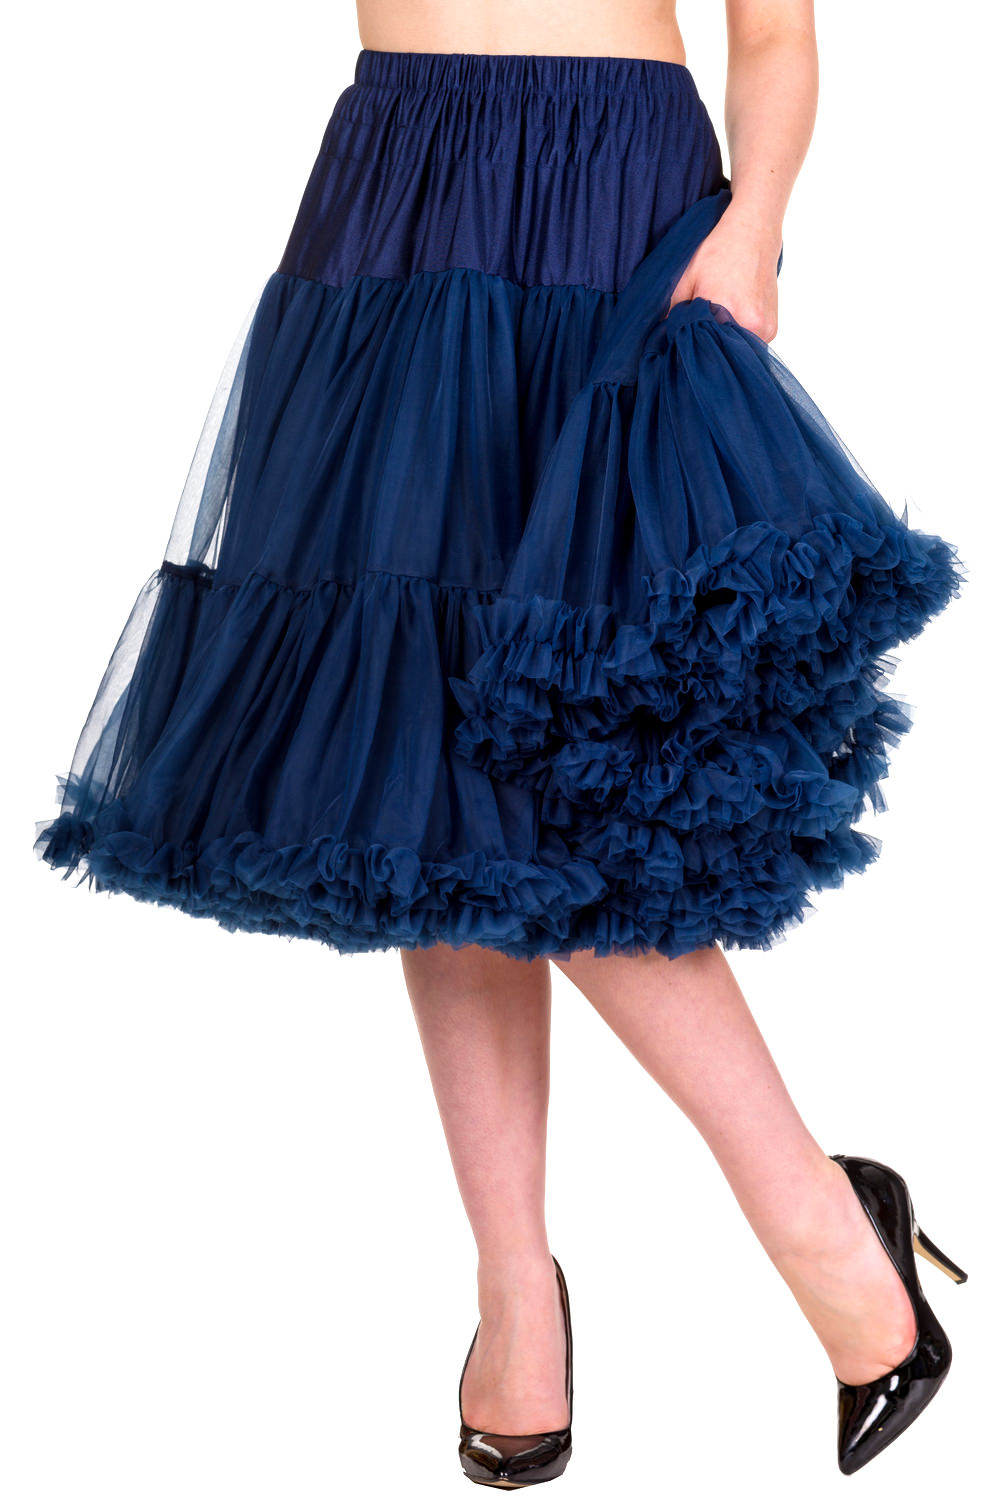 Banned Retro 50s Lizzy Lifeforms Navy Petticoat | 26